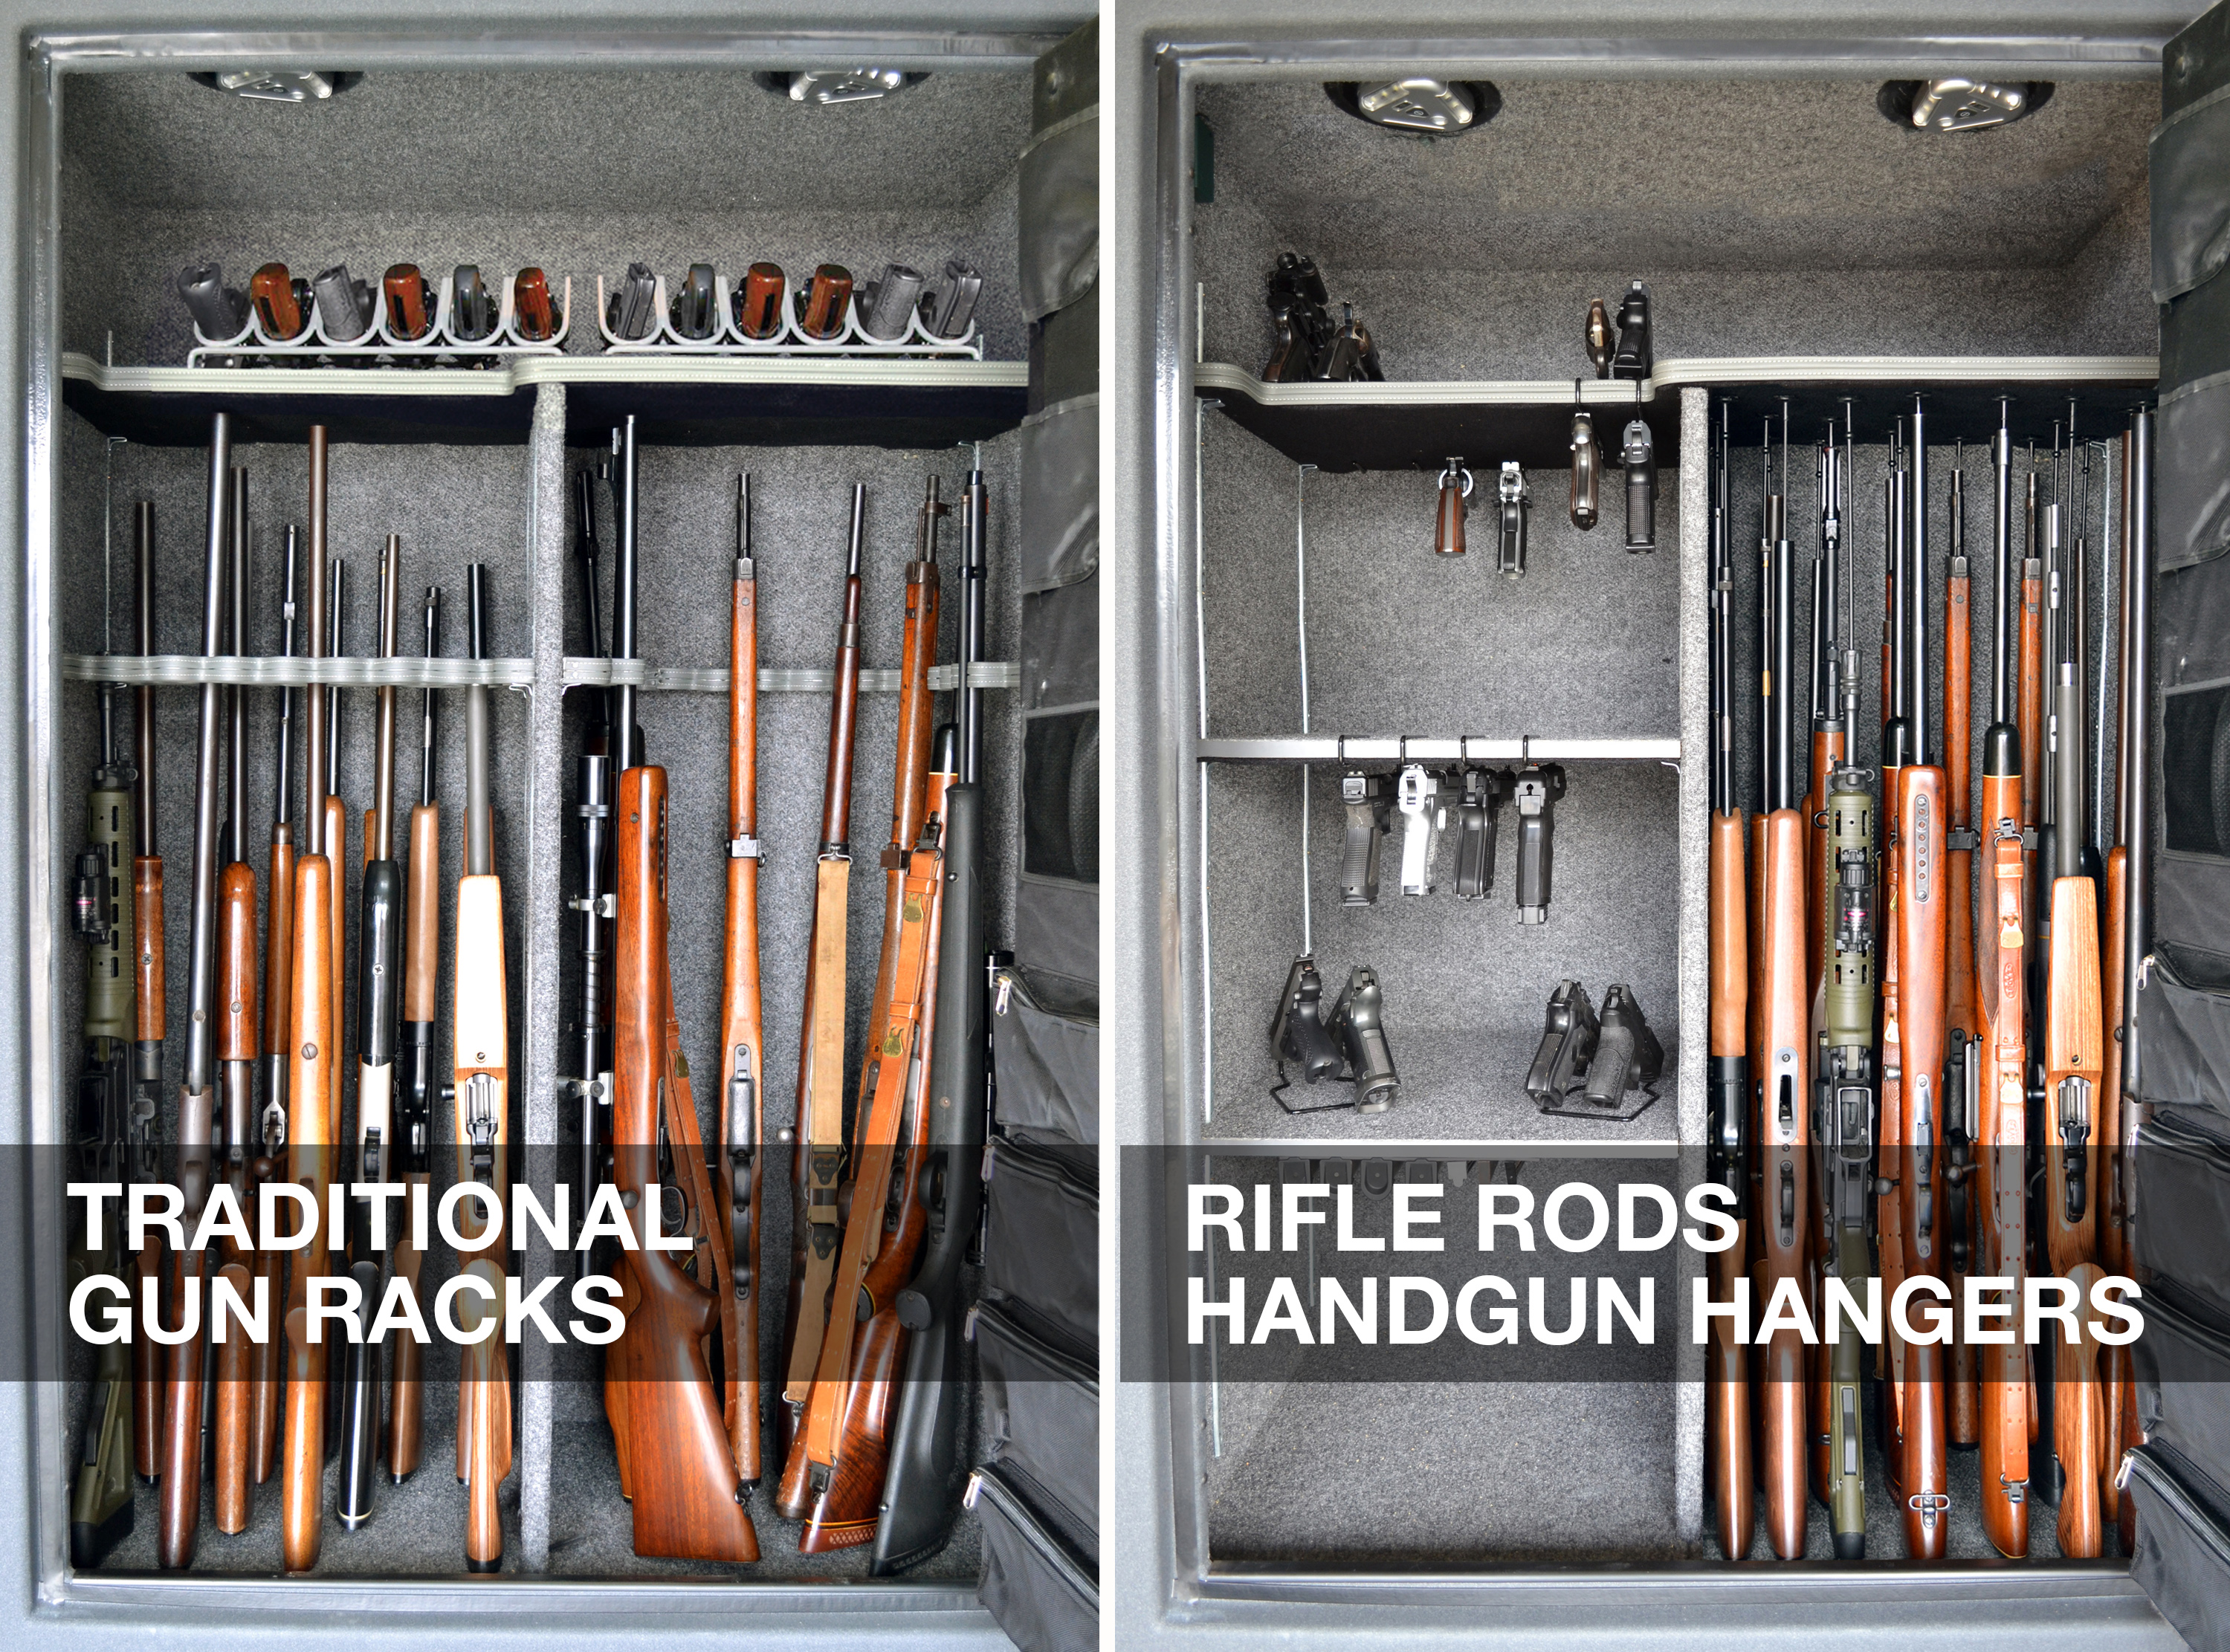 Gun Safe using Rifle Rods and Handgun Hangers vs Traditional Gun Racks